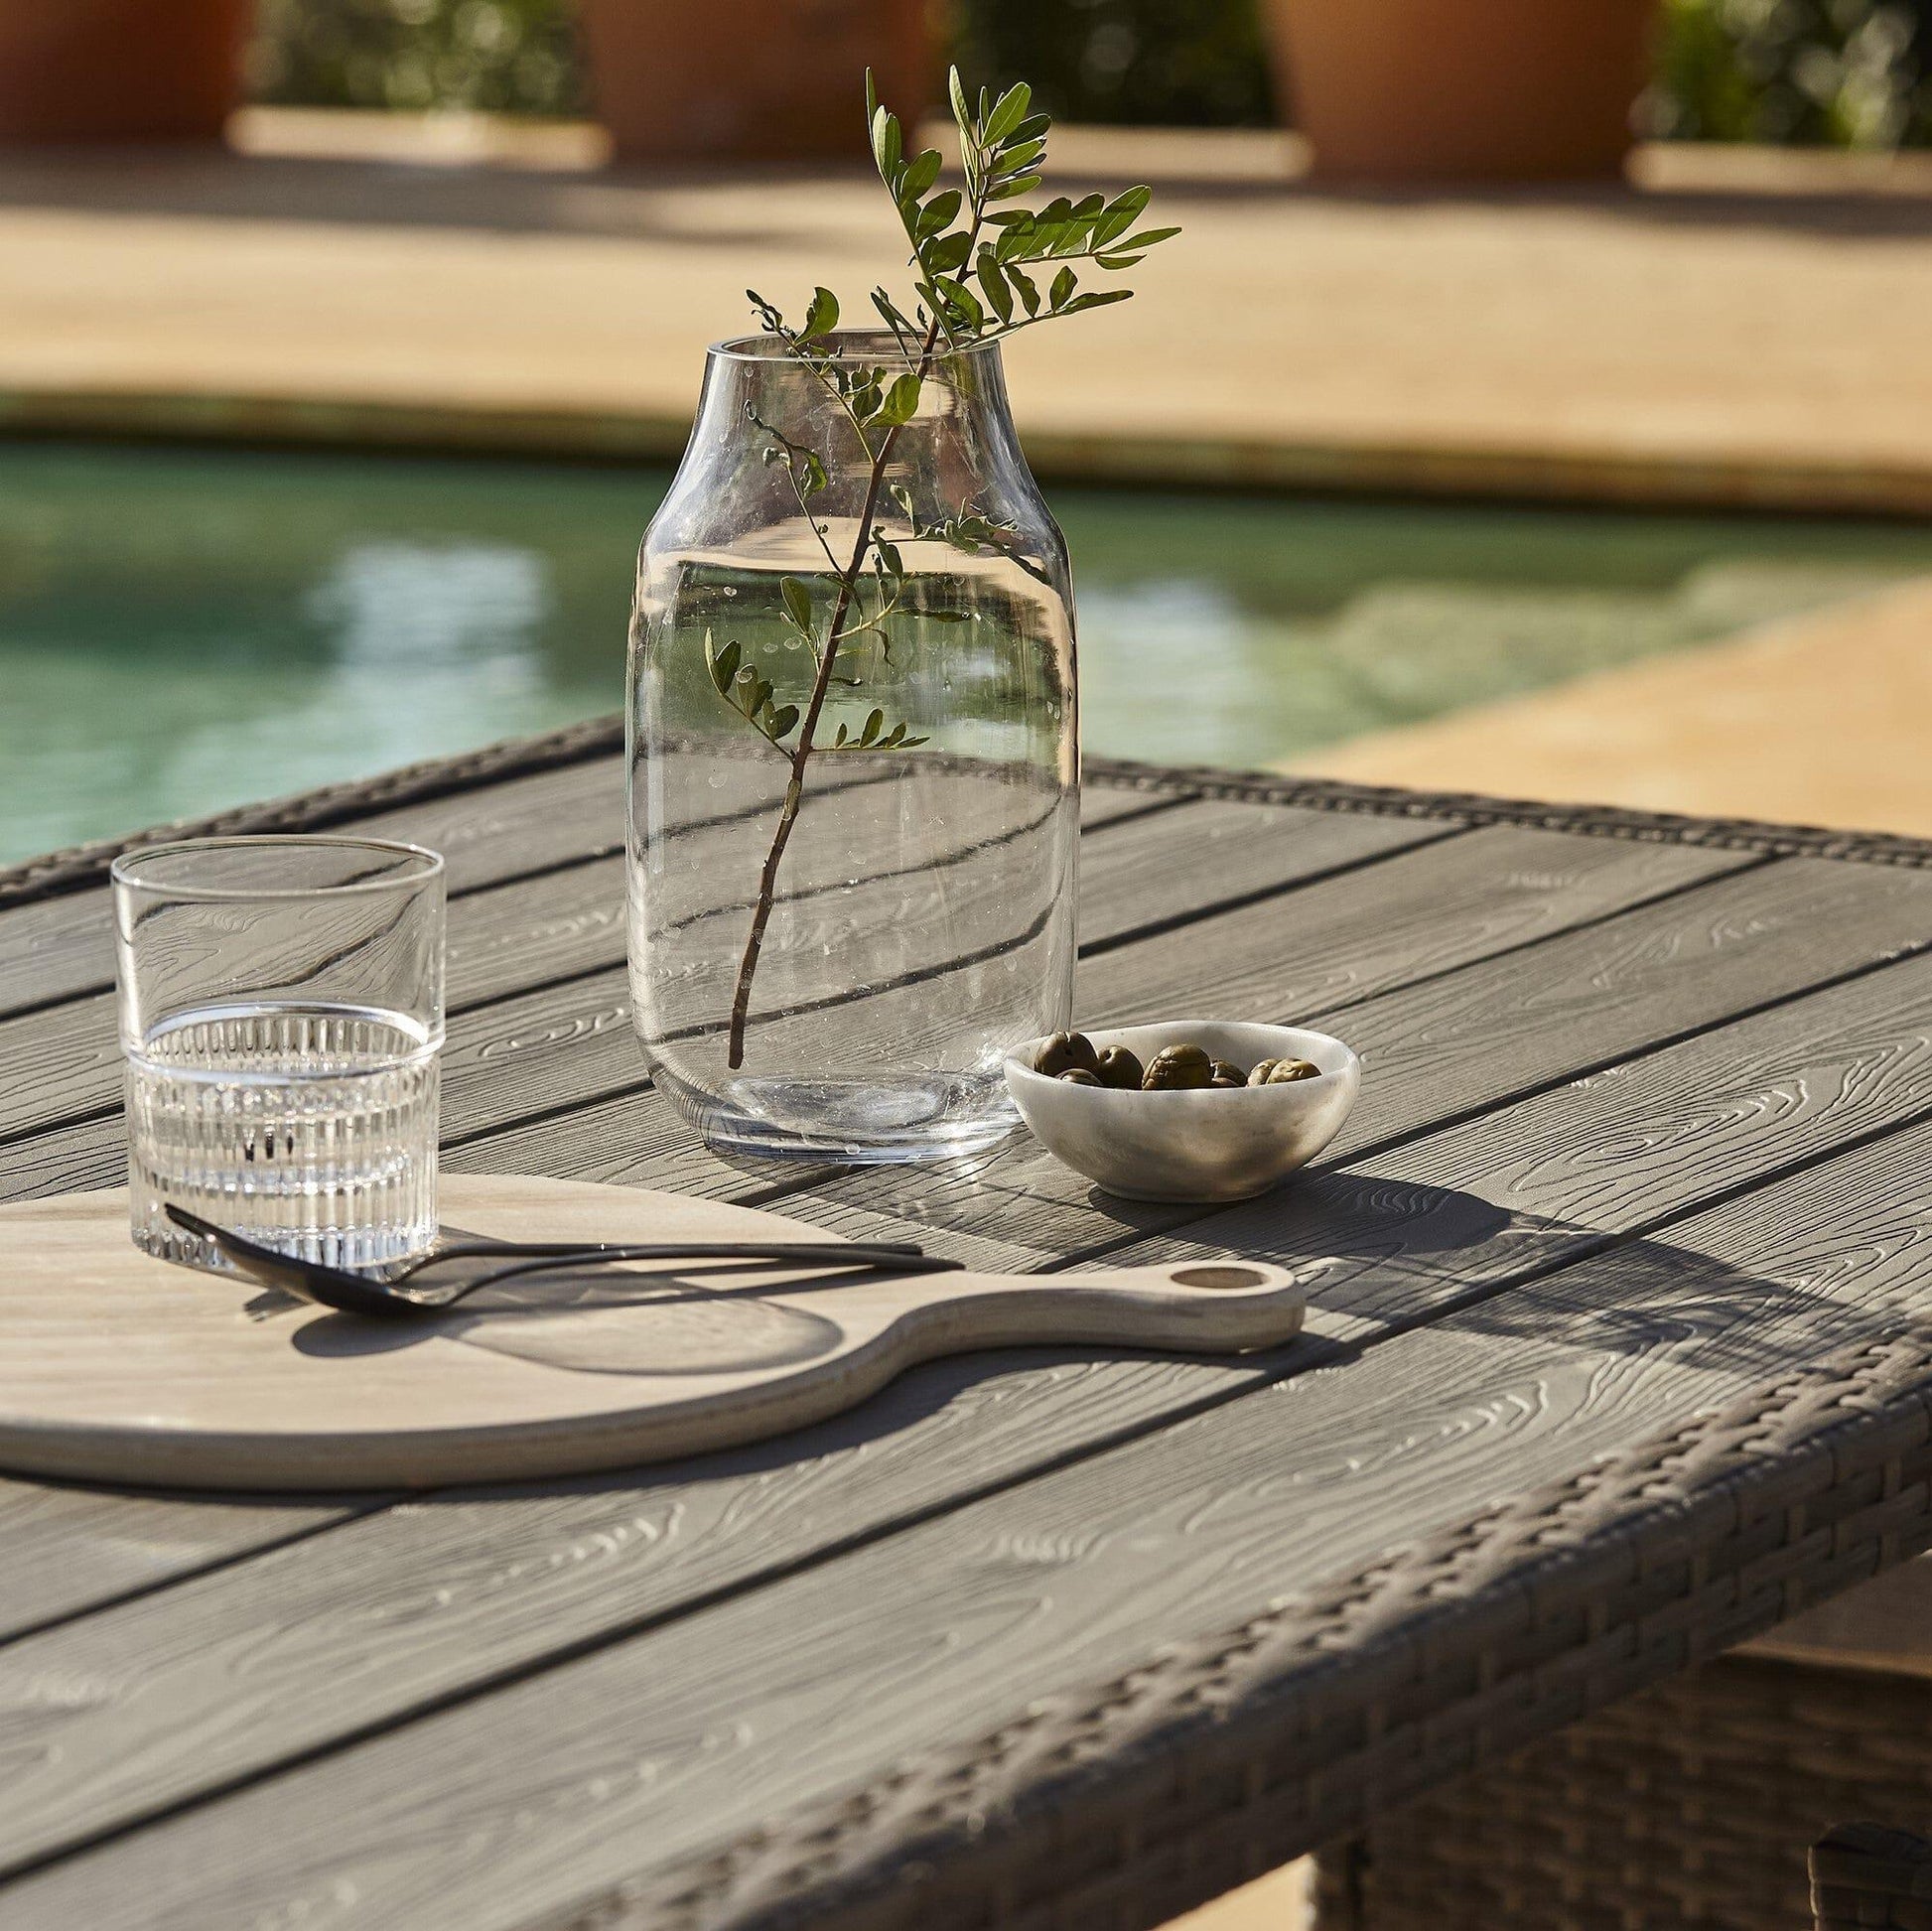 Marston 4 Seater Rattan Outdoor Dining Set - Rattan Garden Furniture - Grey - Polywood Top - Laura James